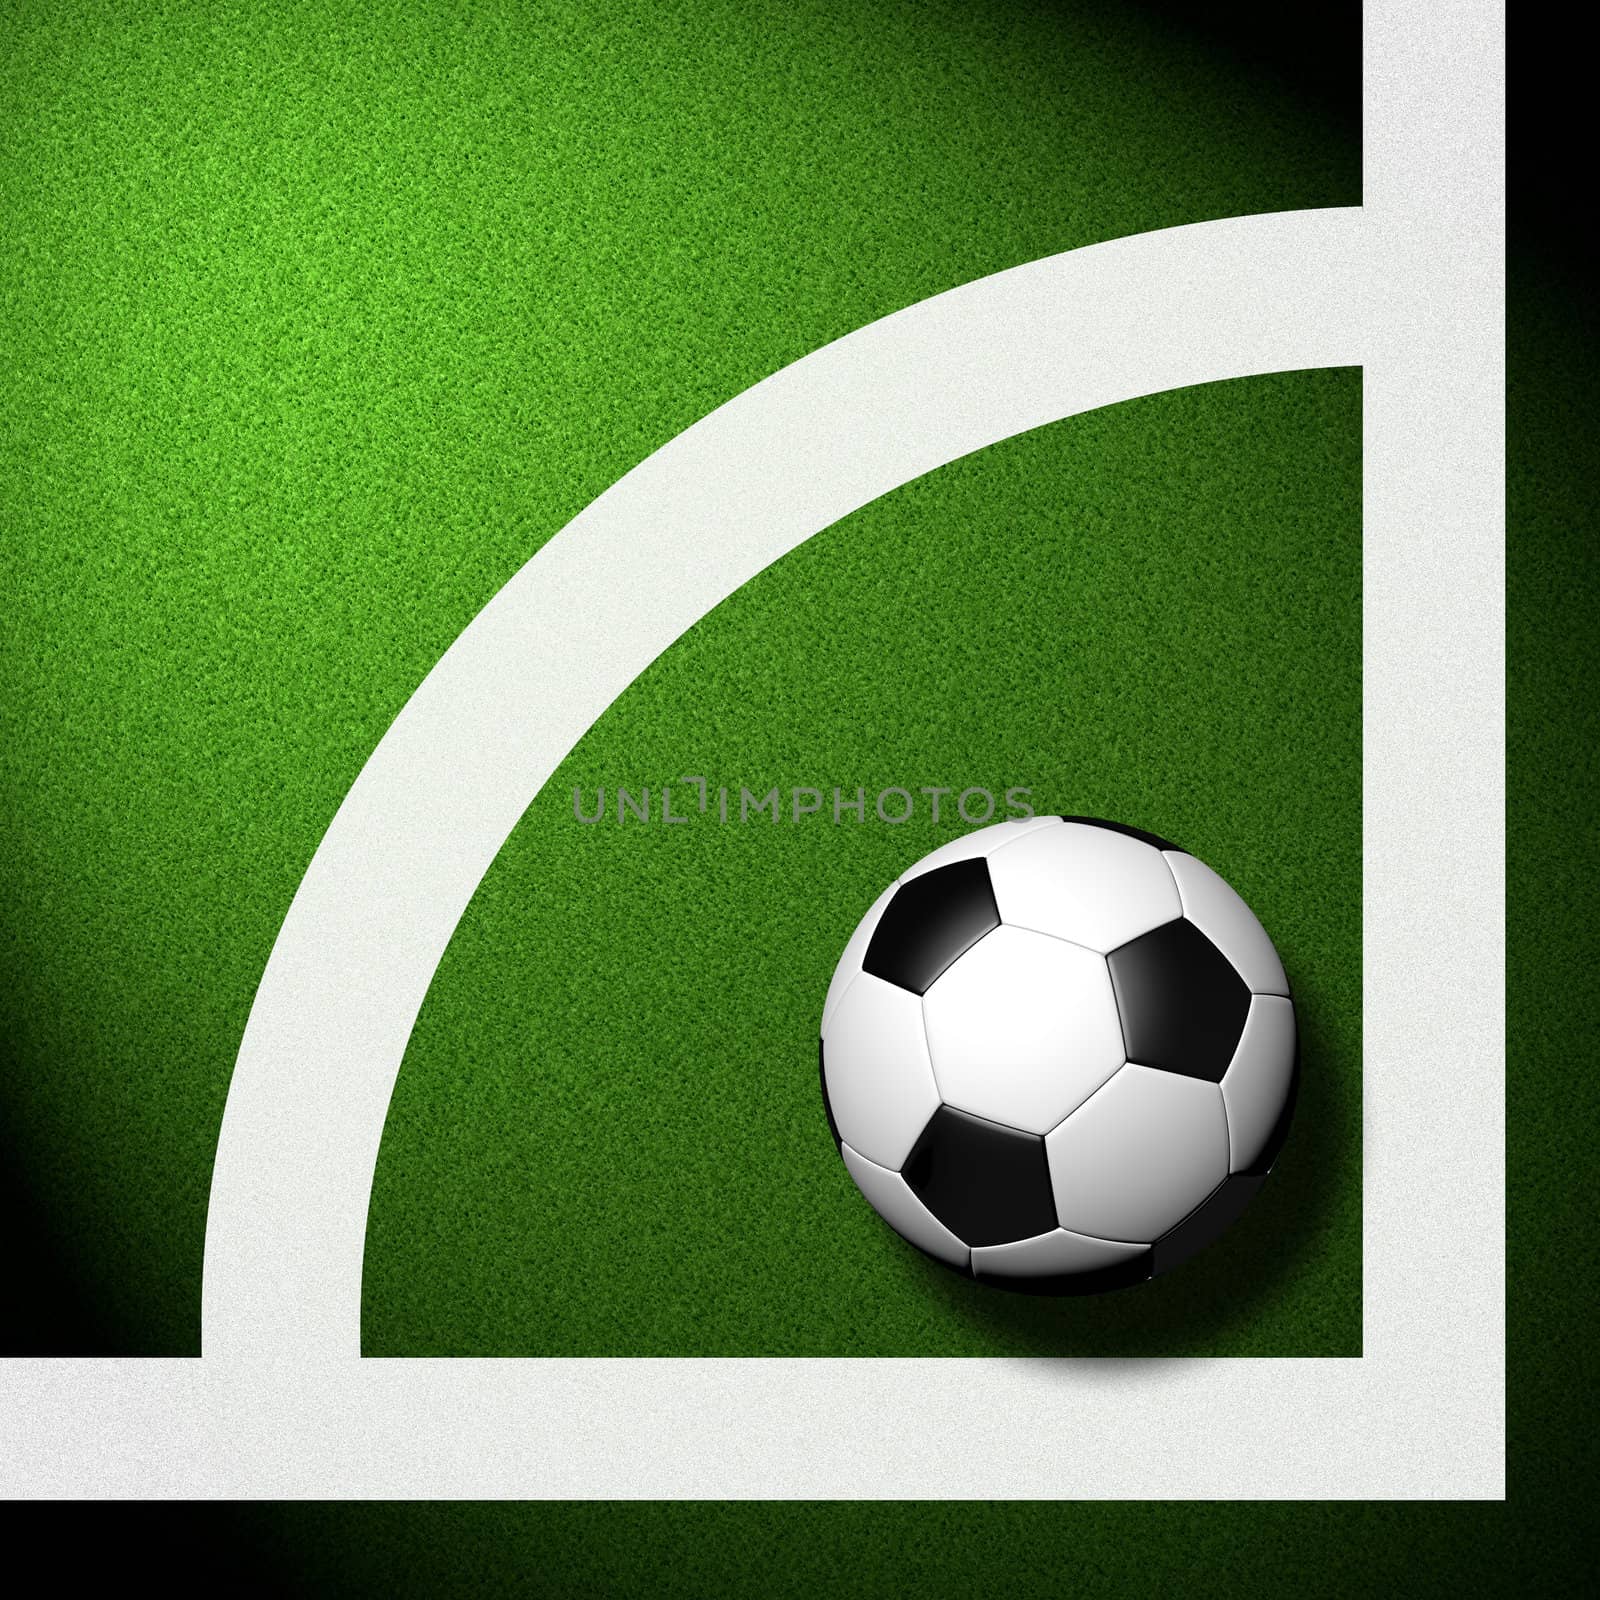 Football ( soccer ball ) in green grass by jakgree